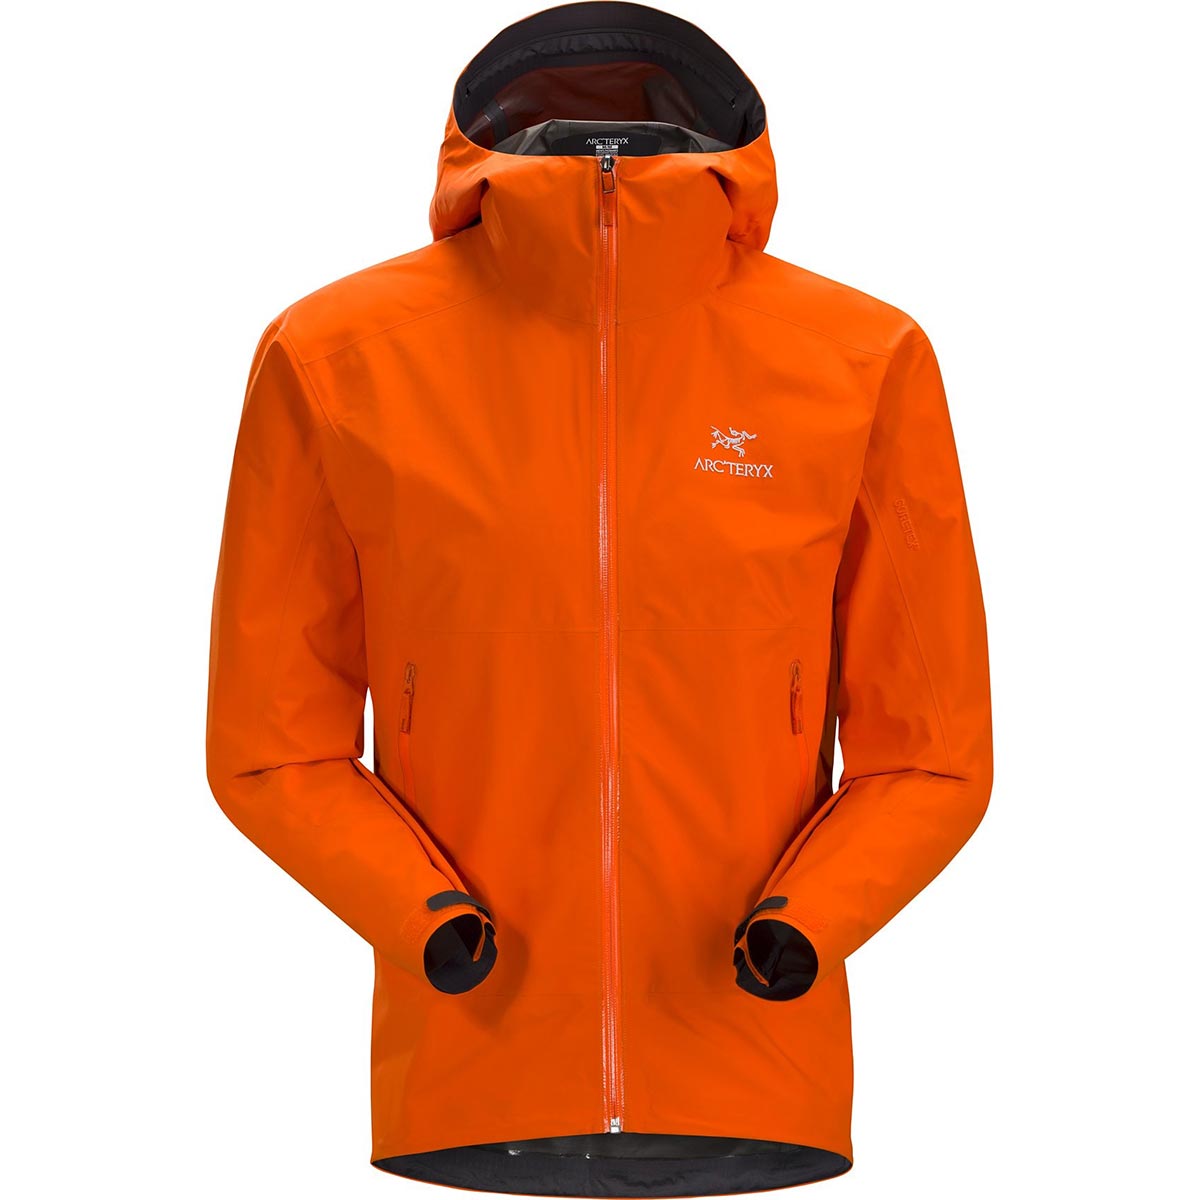 Zeta SL Jacket, men's, discontinued Spring 2019 colors